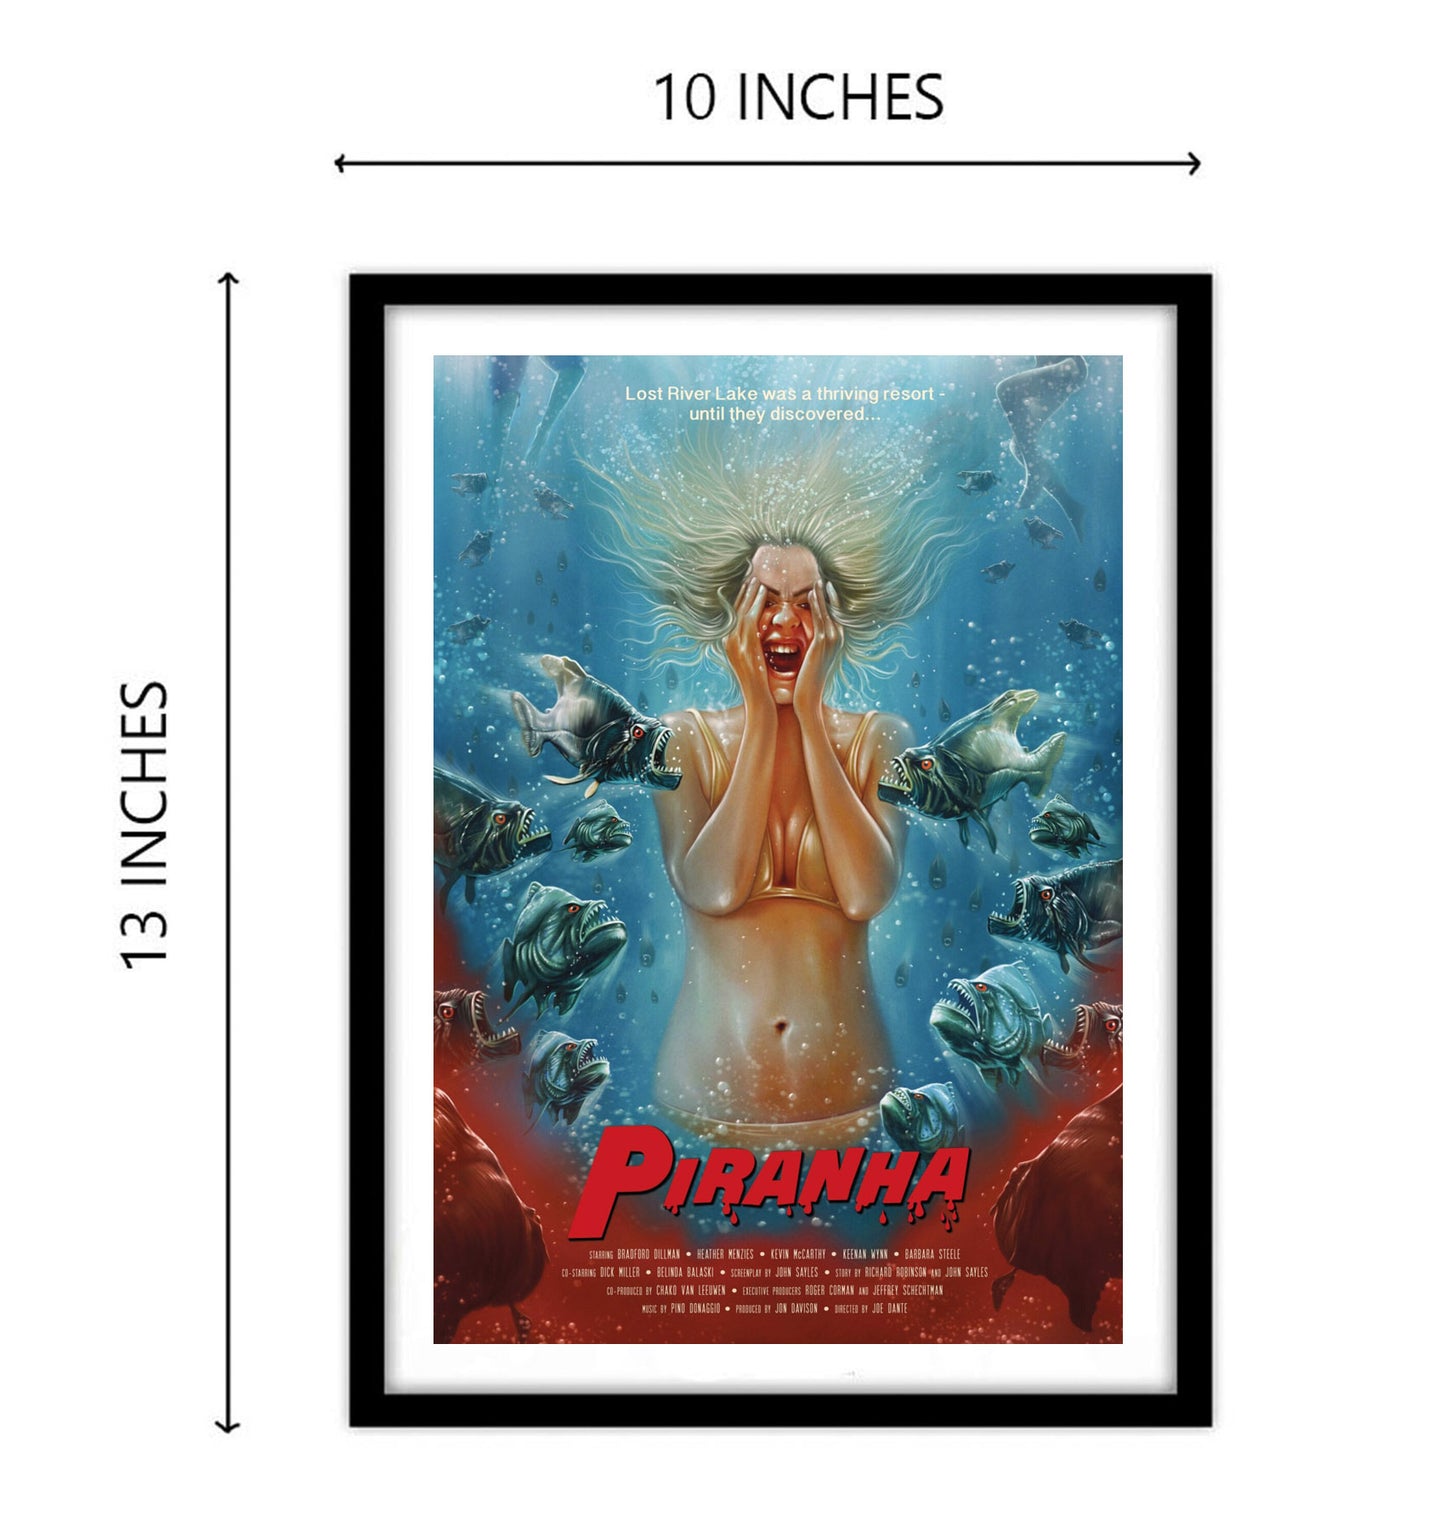 Piranha Movie Artwork